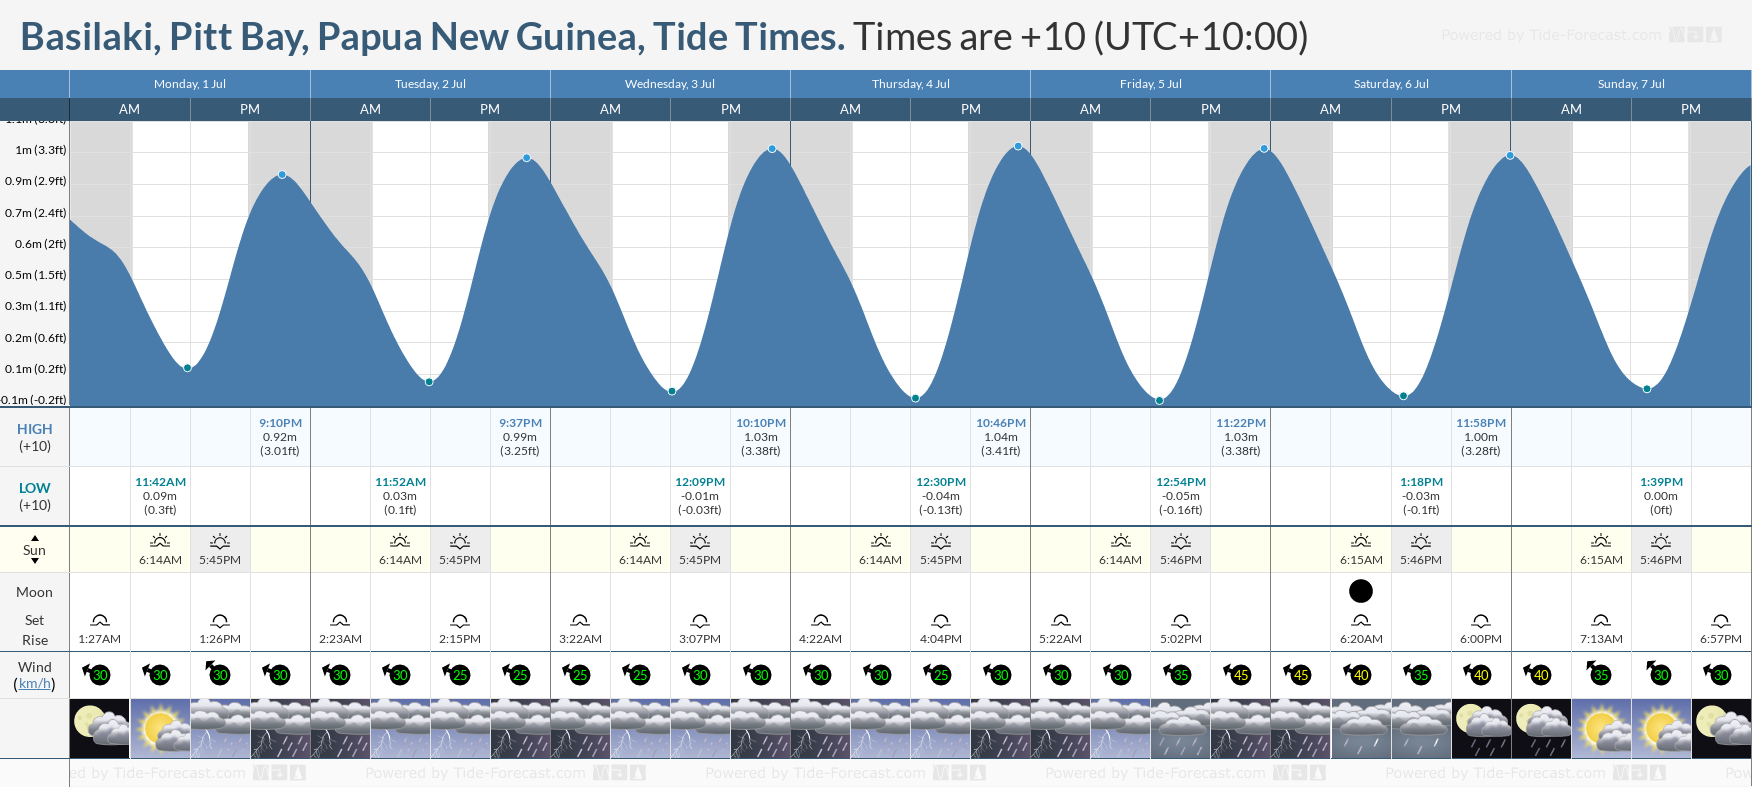 Tide Times and Tide Chart for Basilaki, Pitt Bay